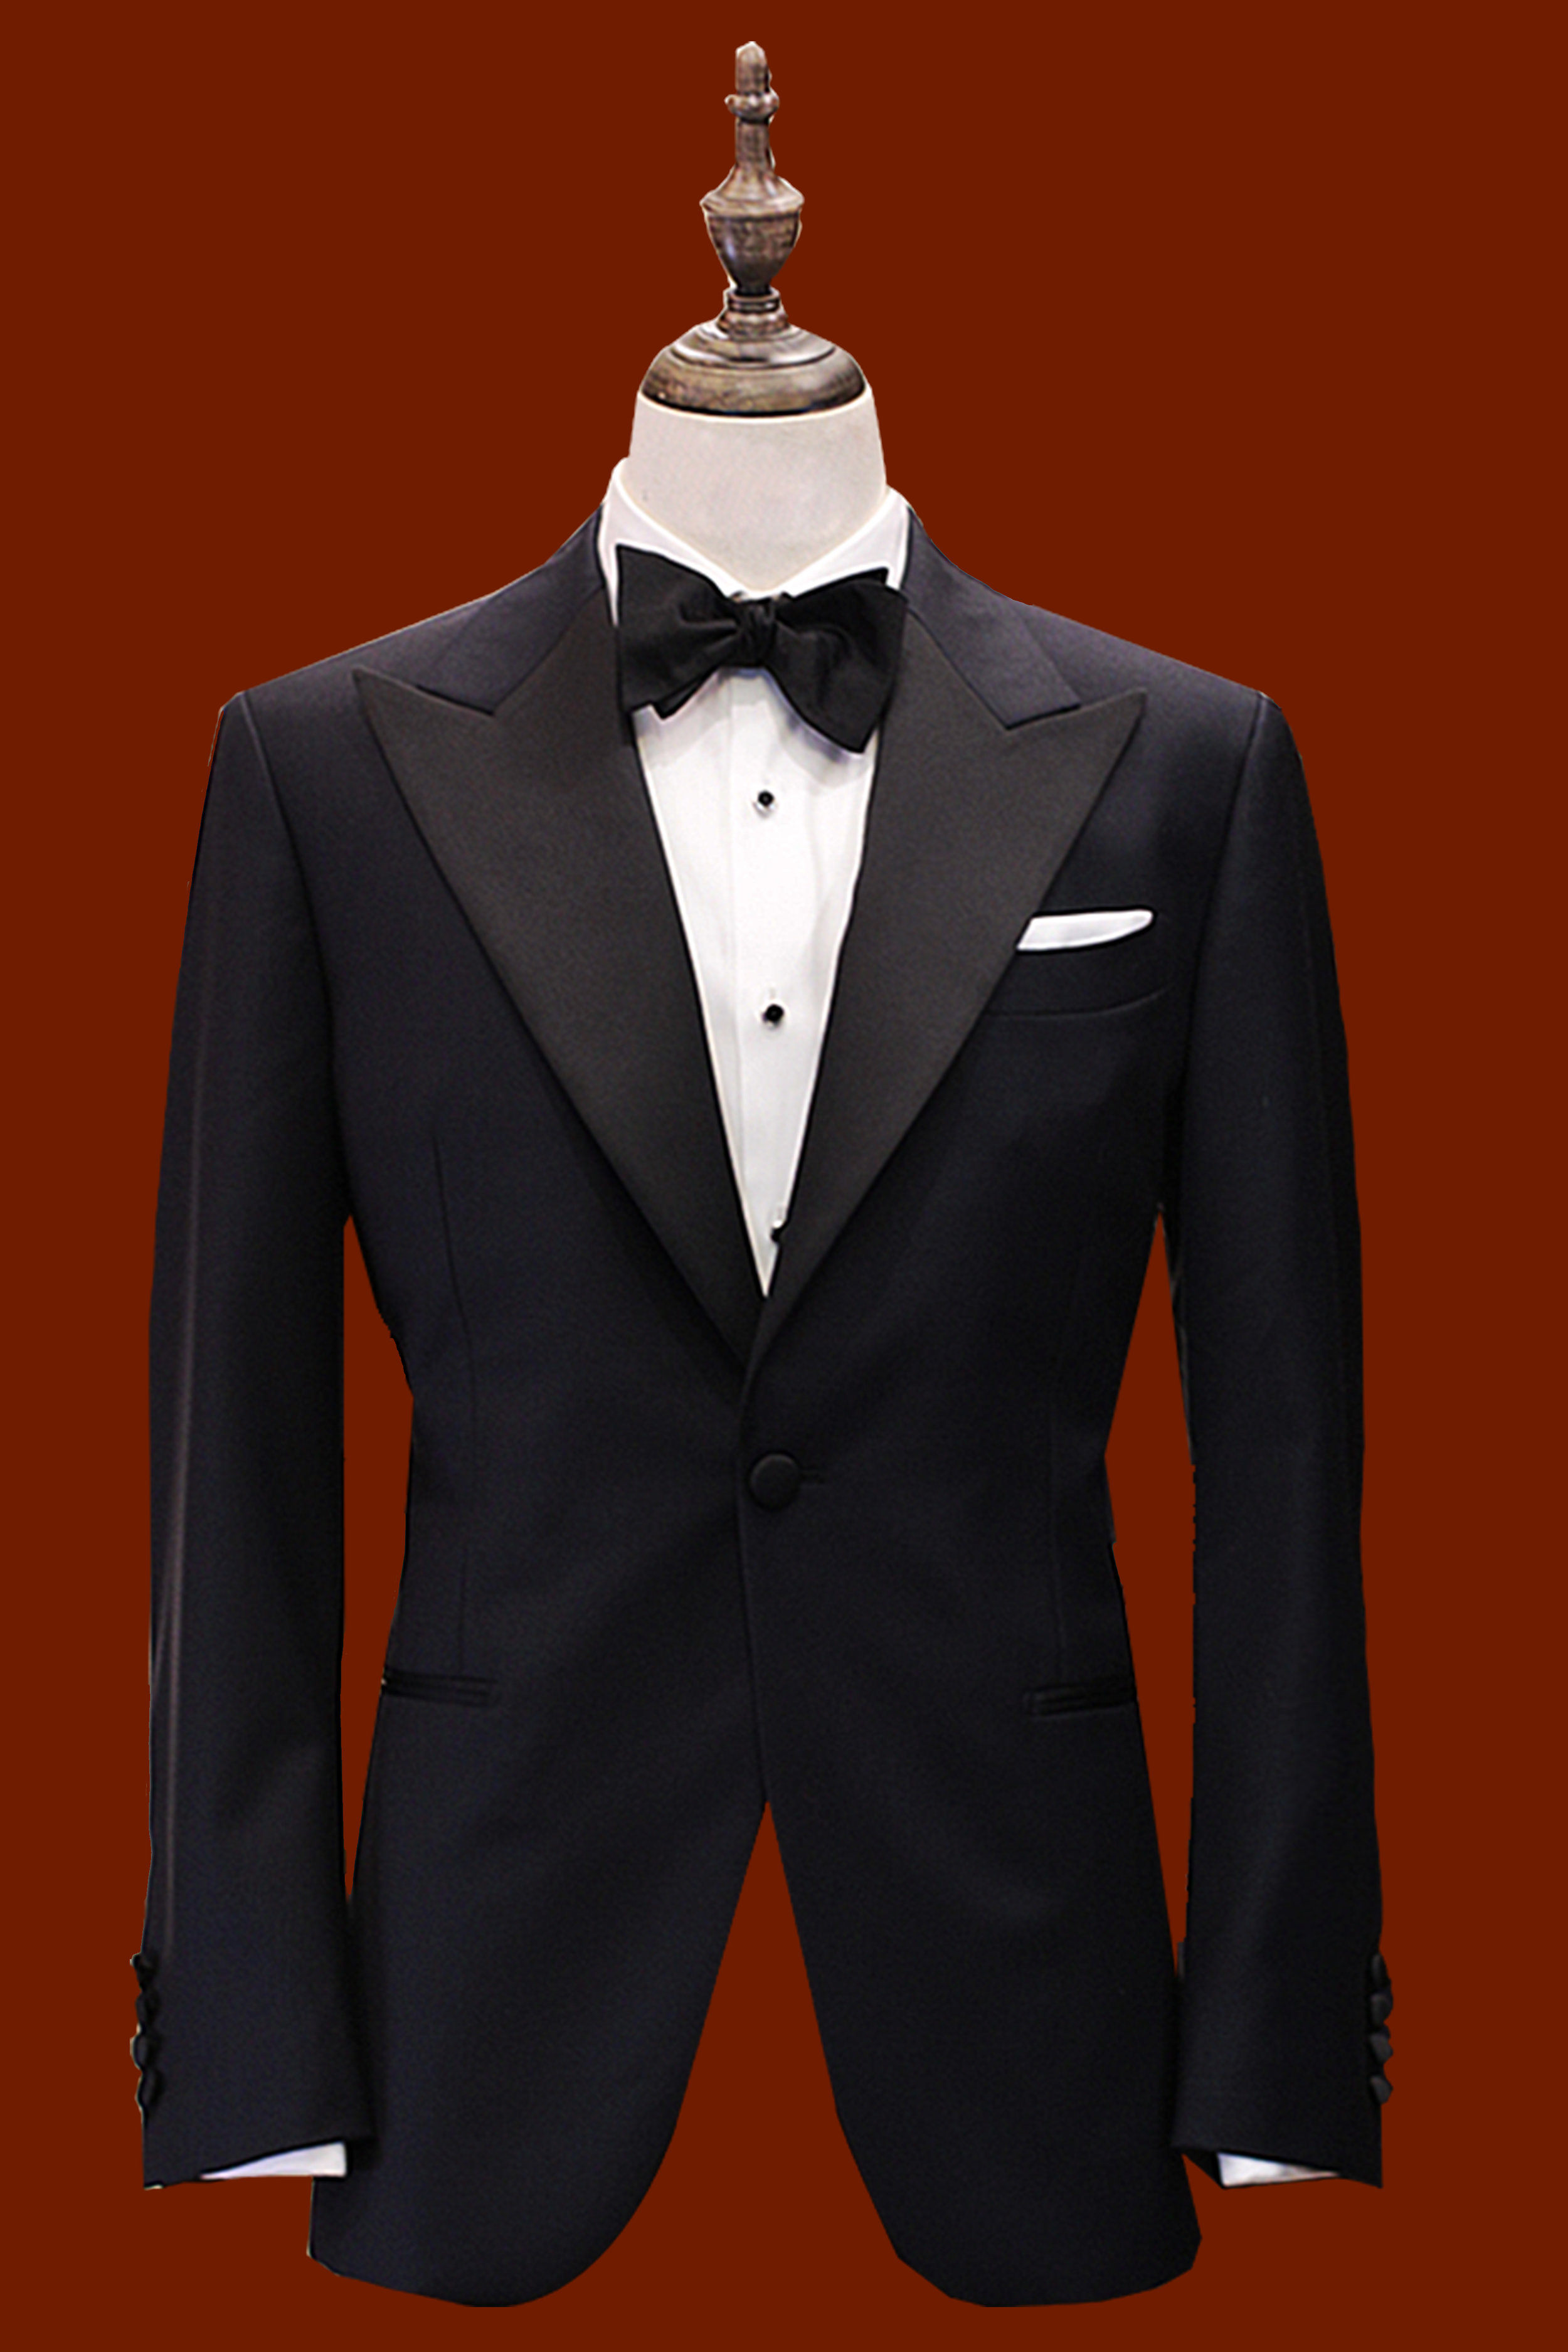 Made Suits® Singapore Tailor — Bespoke Tuxedo | Made to Measure Tuxedo